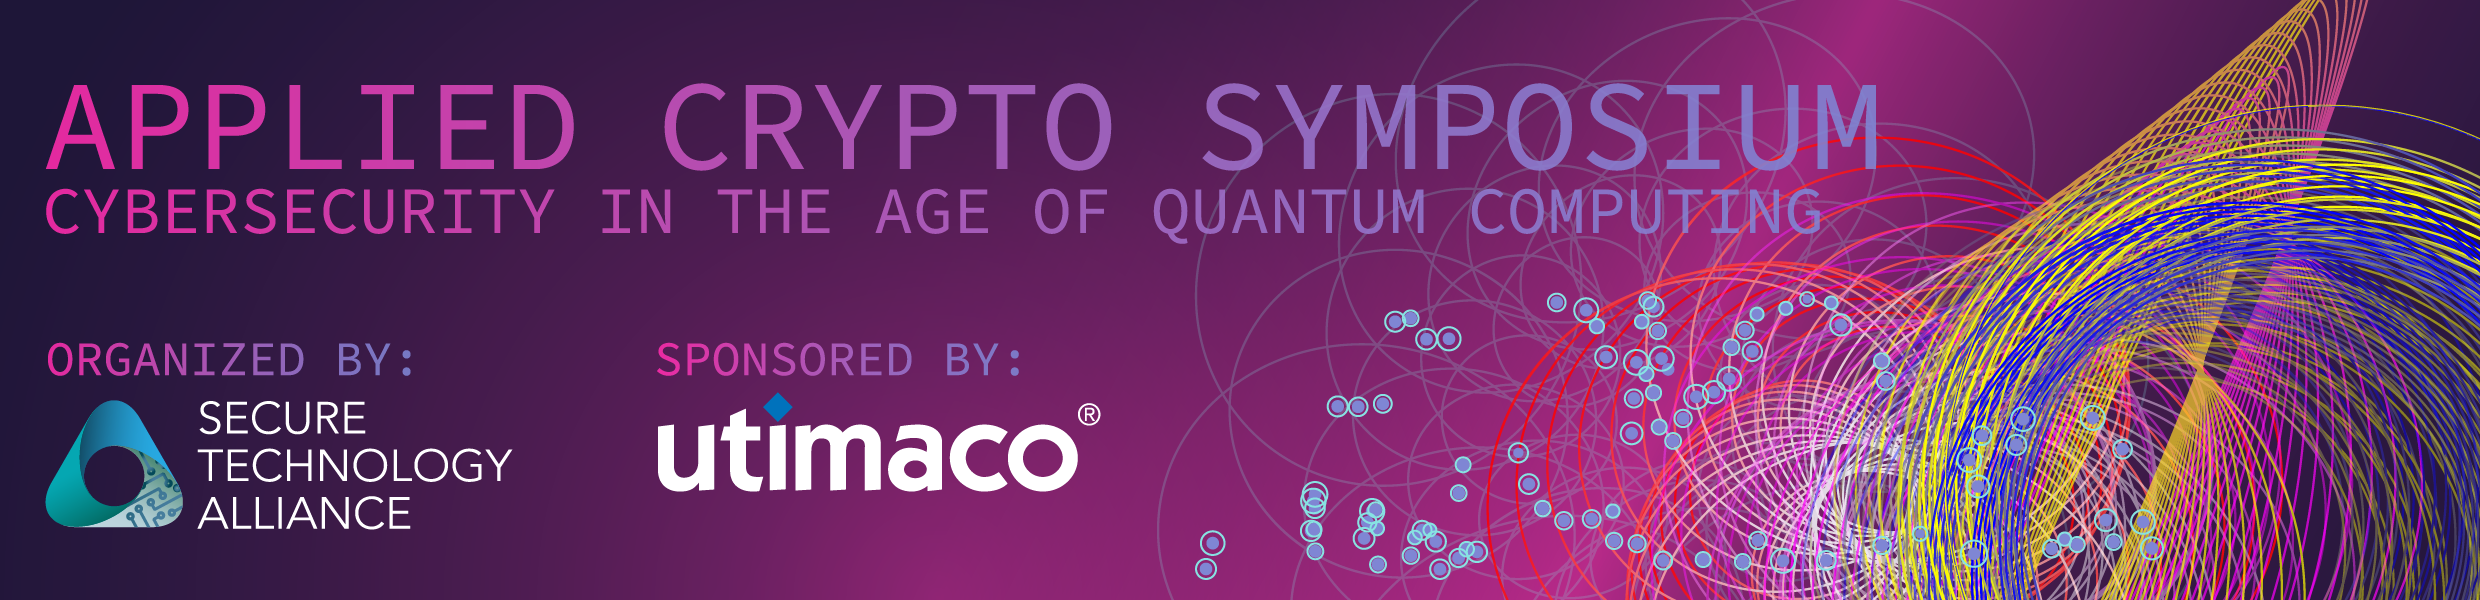 Applied Crypto Symposium